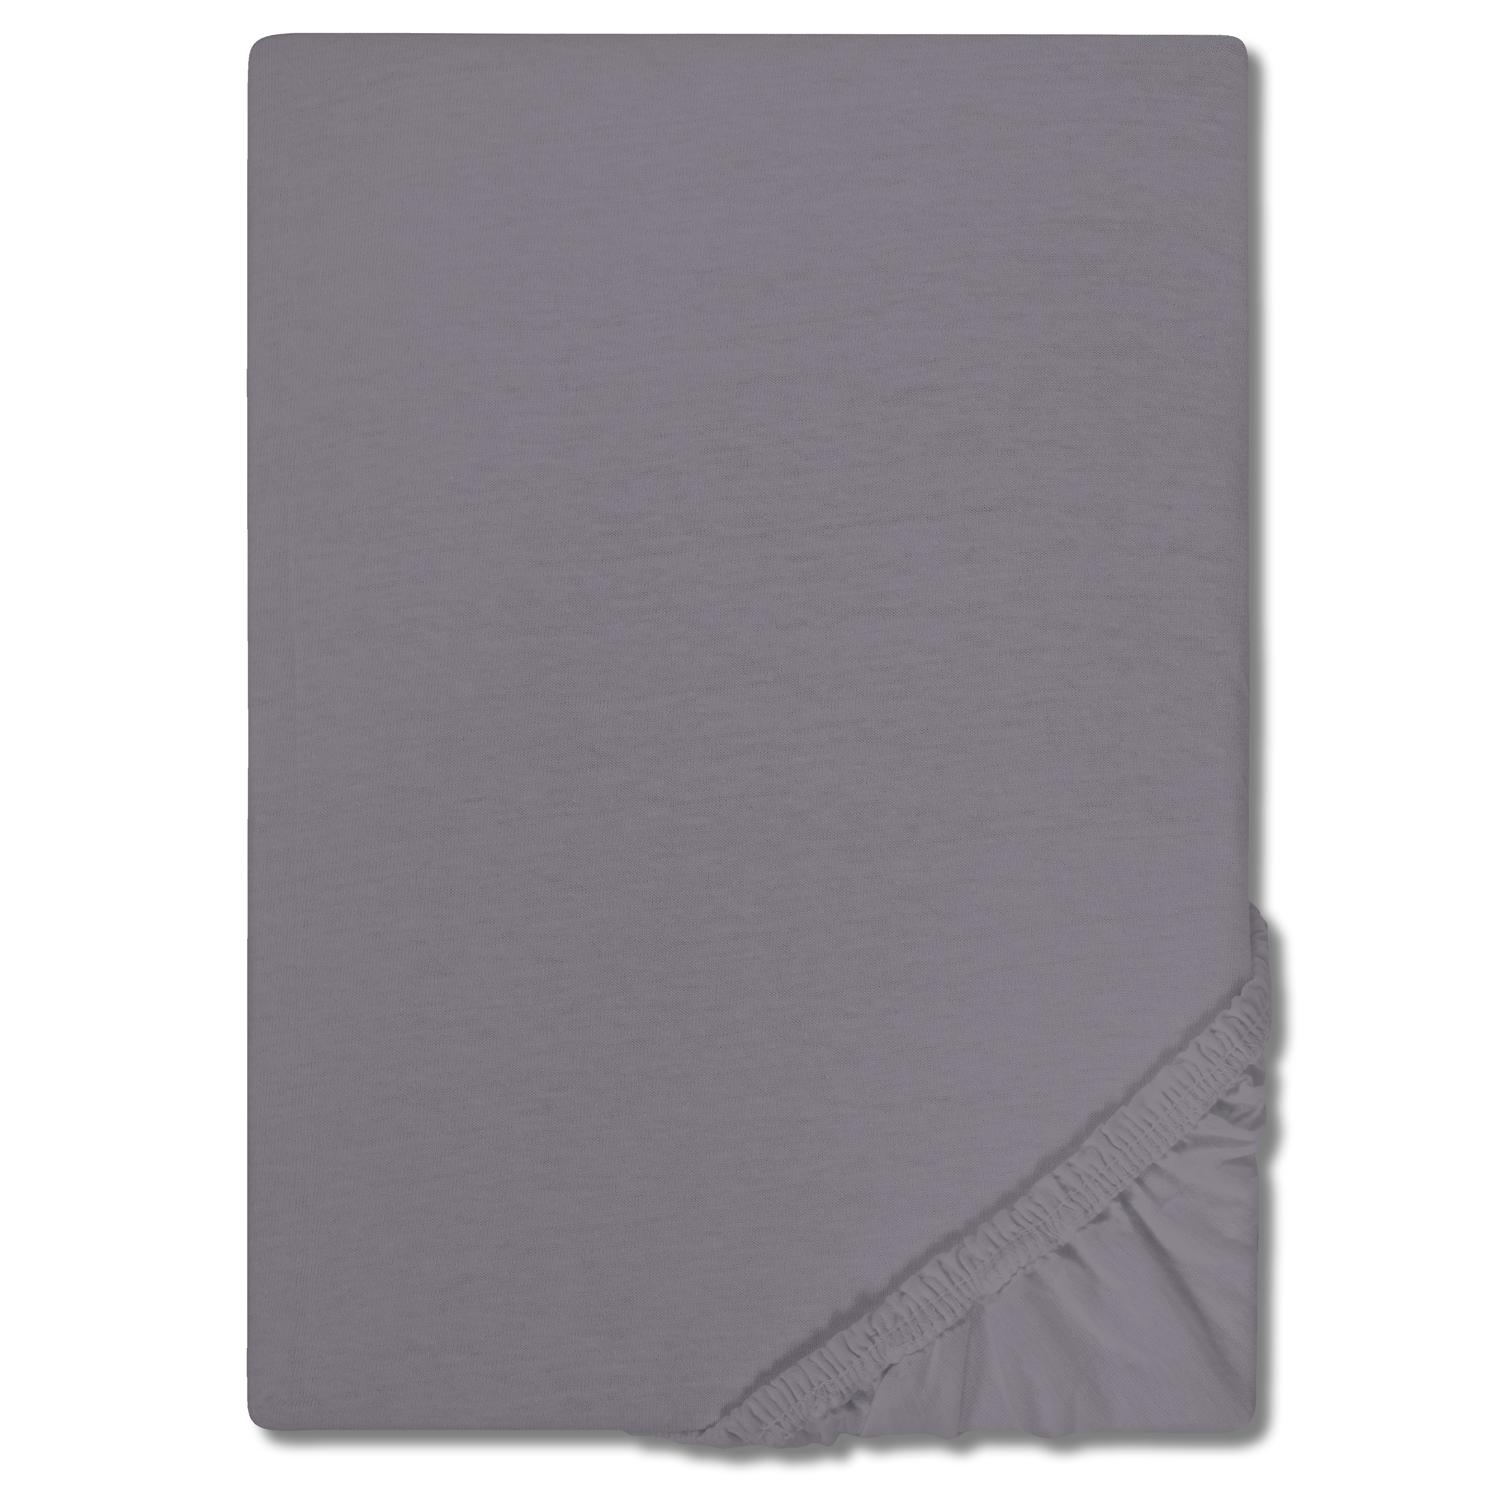 CloudComfort Basic Spannbettlaken Jersey-Stretch dunkelgrau 120 x 200 cm